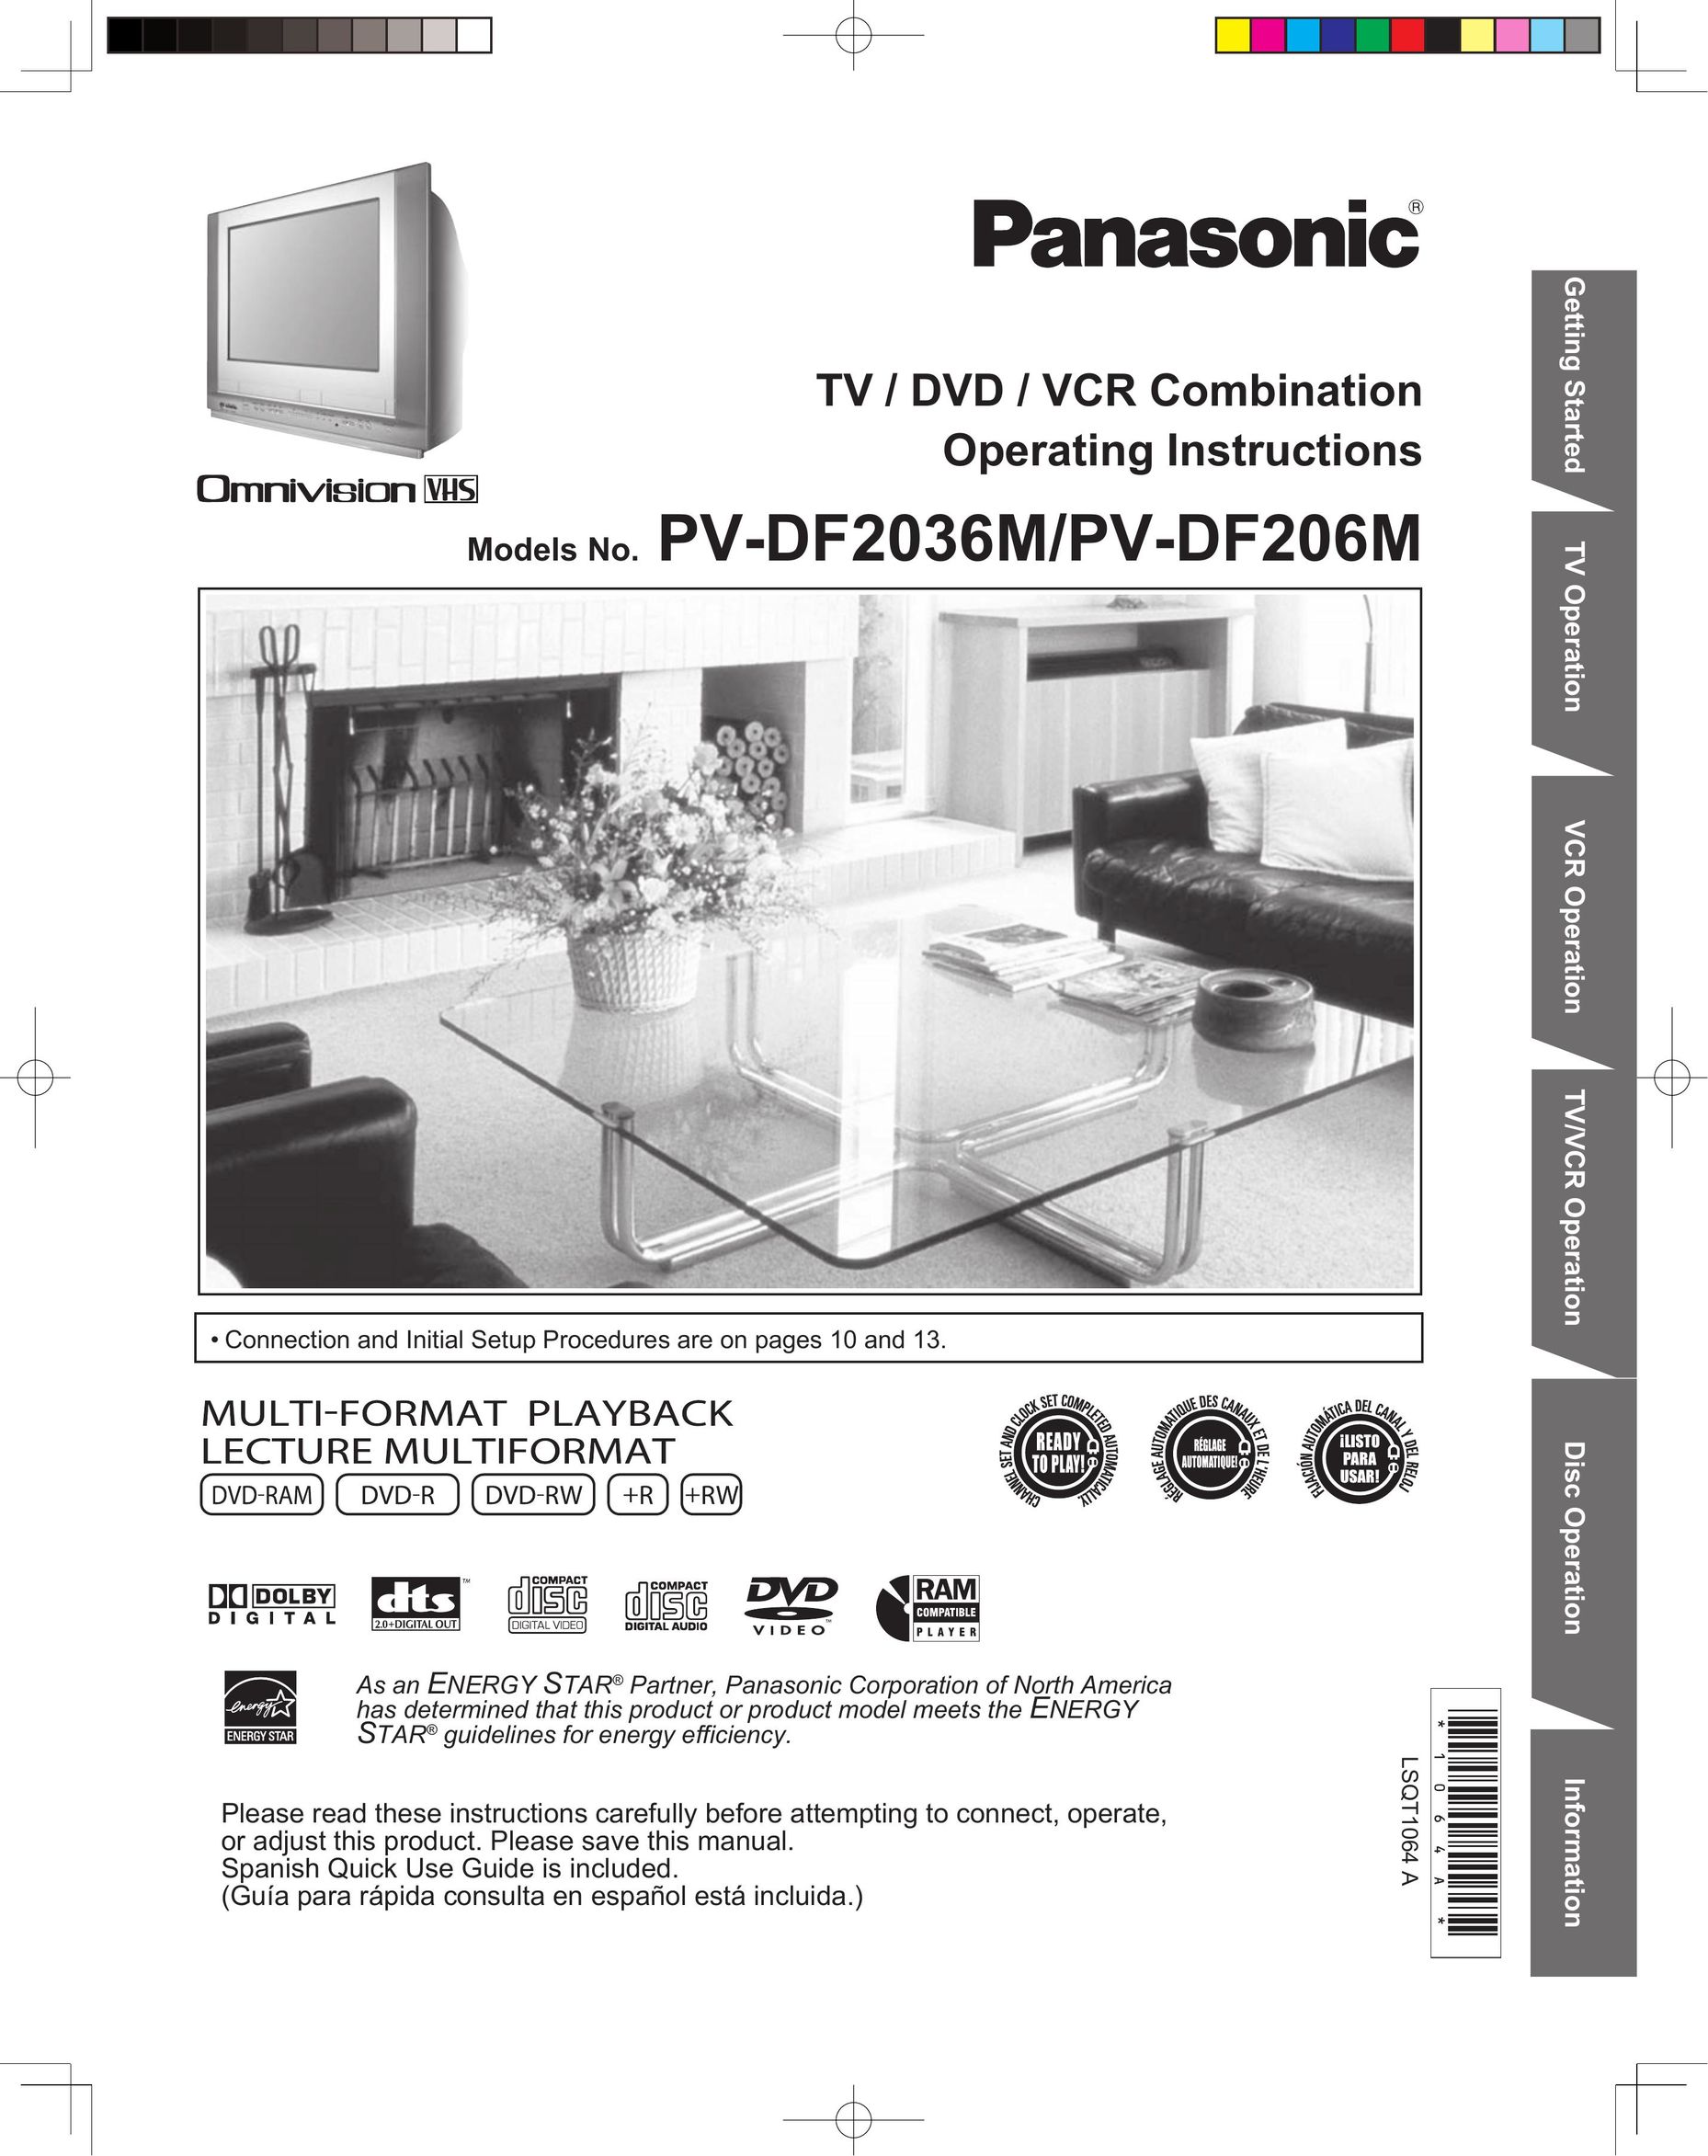 Panasonic PV-DF206M TV DVD Combo User Manual